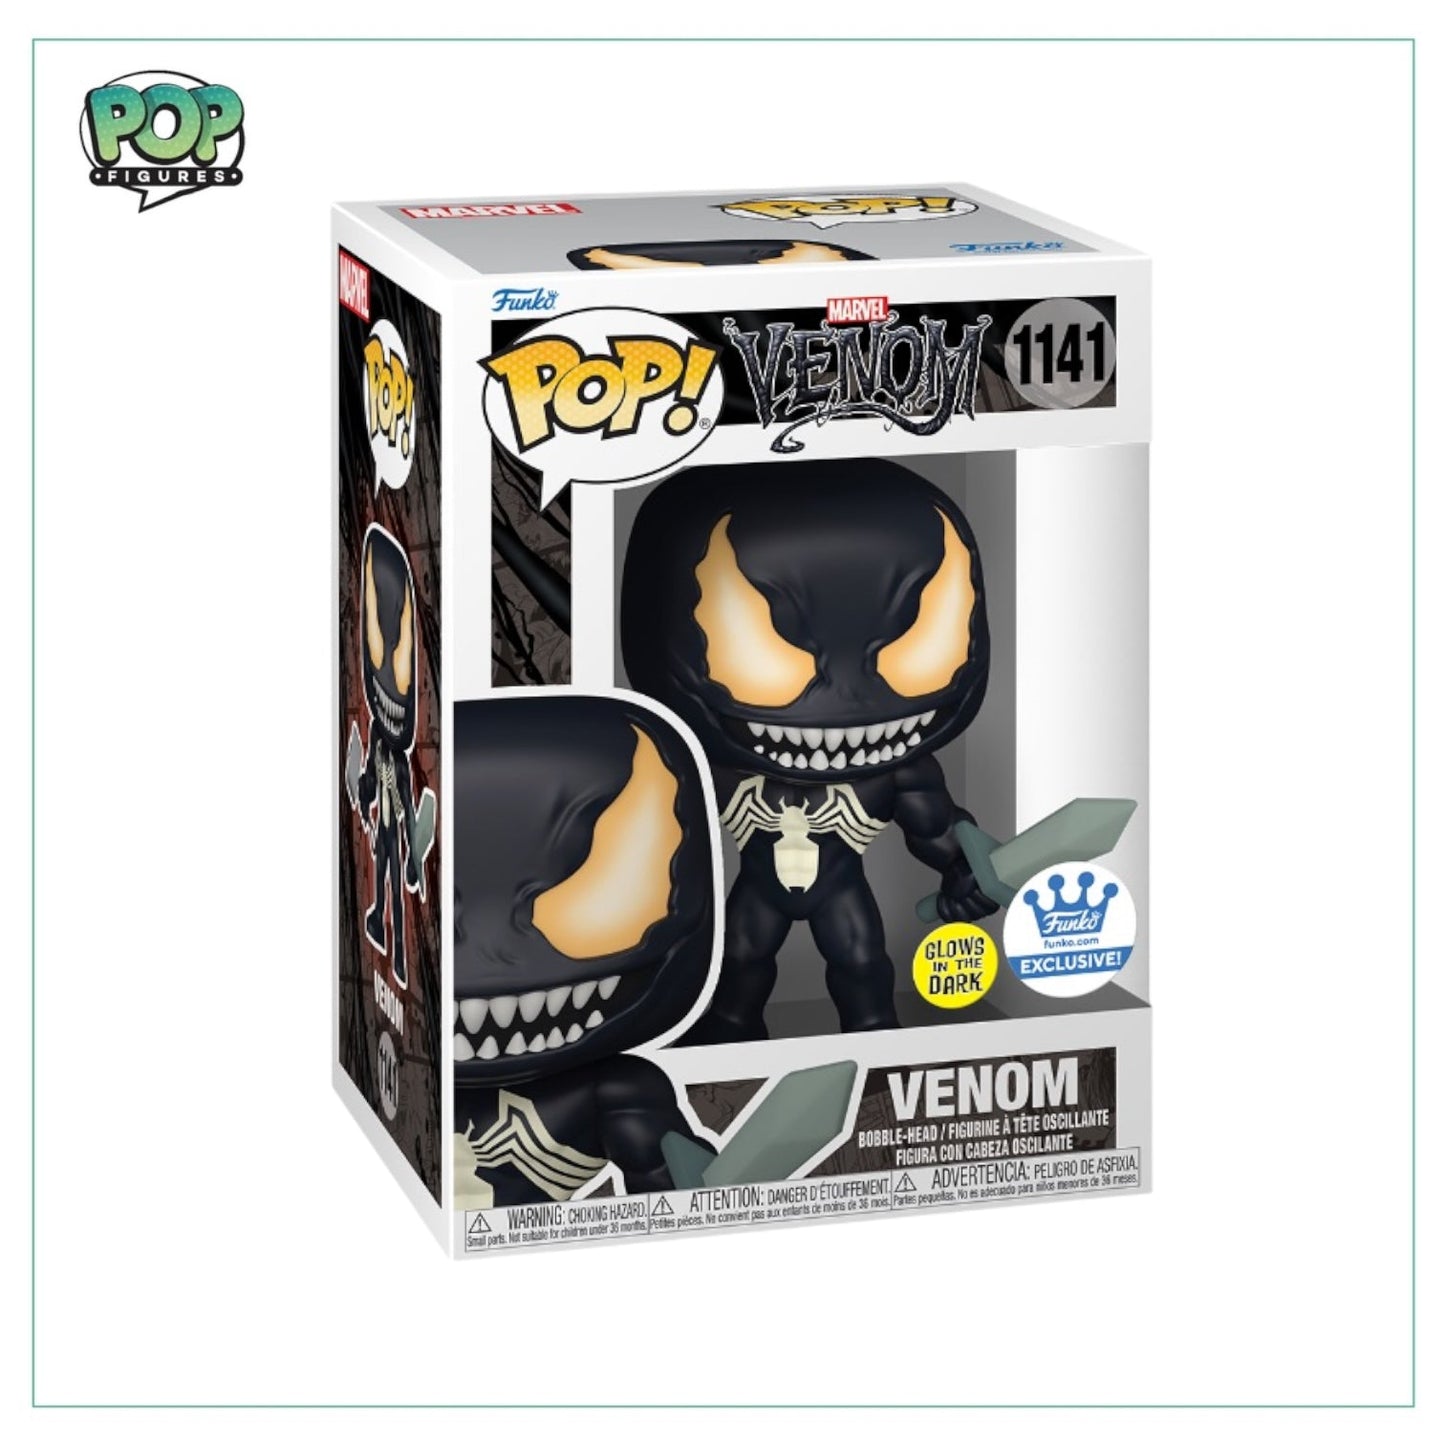 Venom #1141 (w/ Weapons - Glows In The Dark) Funko Pop! - Venom - Funko Shop Exclusive - Angry Cat